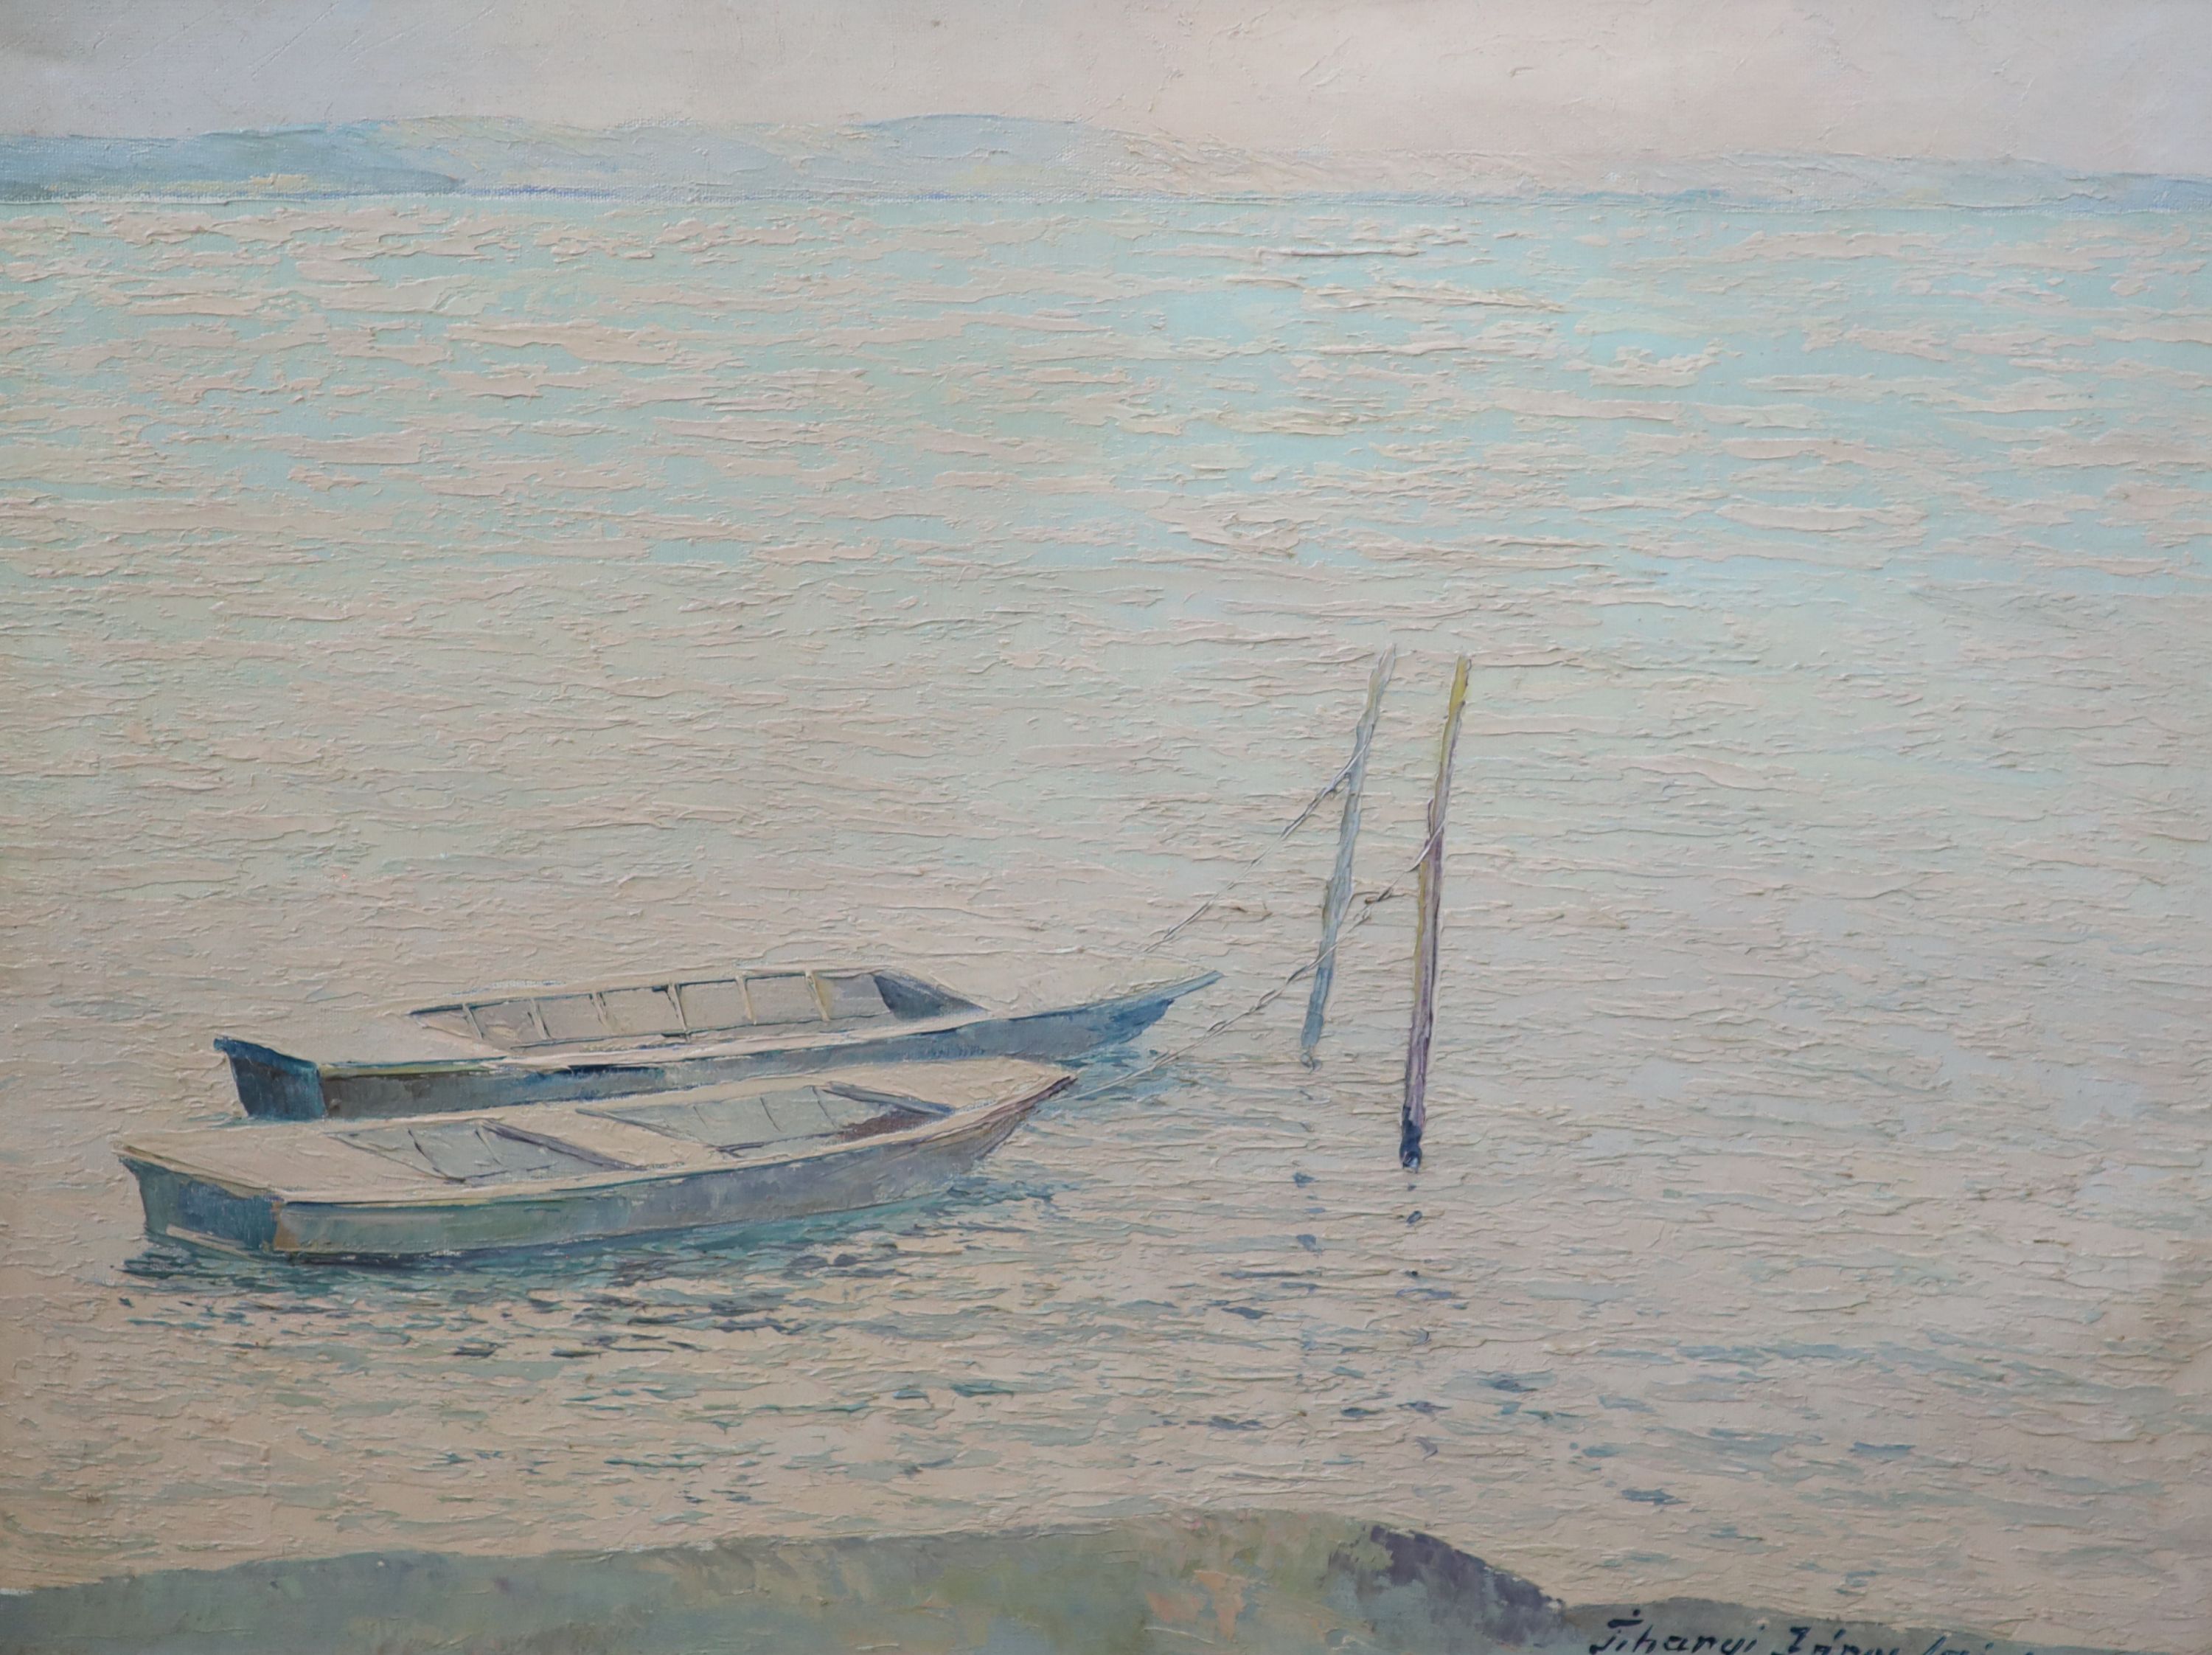 János Lajos Tihanyi (Hungarian, 1892-1957), Fishing boats on a calm sea, Oil on canvas, 60 x 80cm.